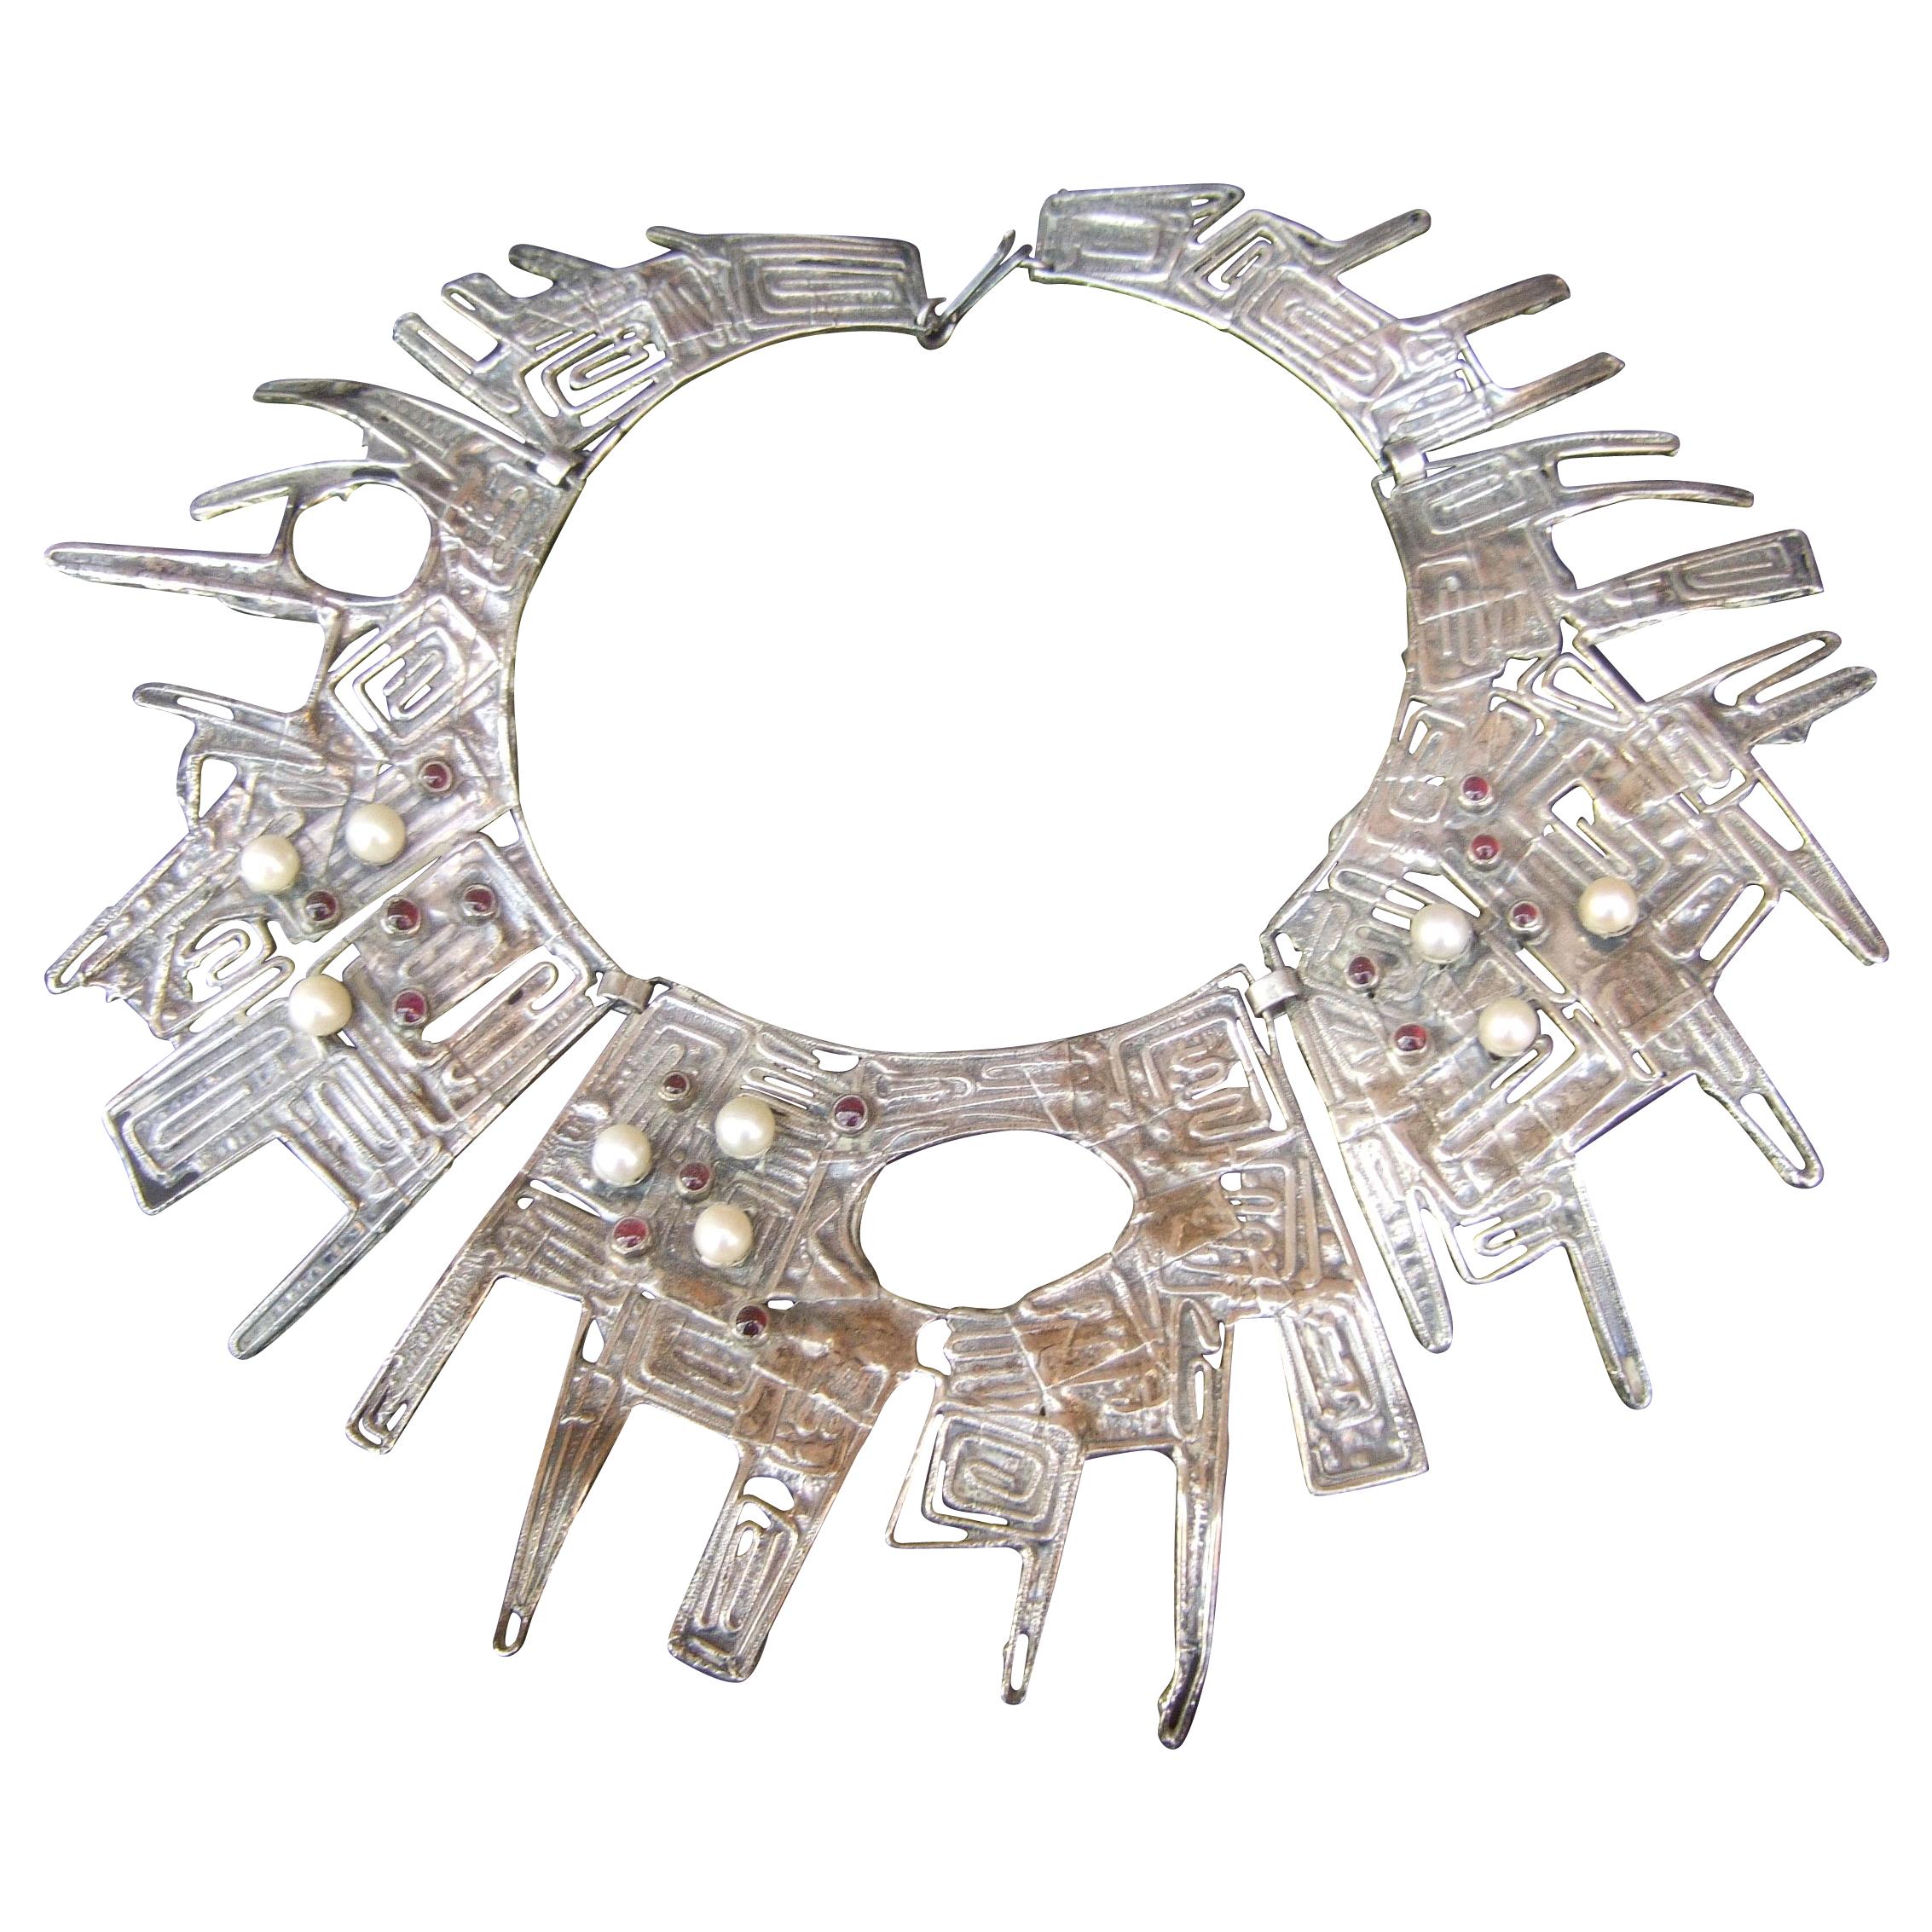 Massive Avant garde Sterling Silver Brutalist Statement Necklace by Rachel Gera  For Sale